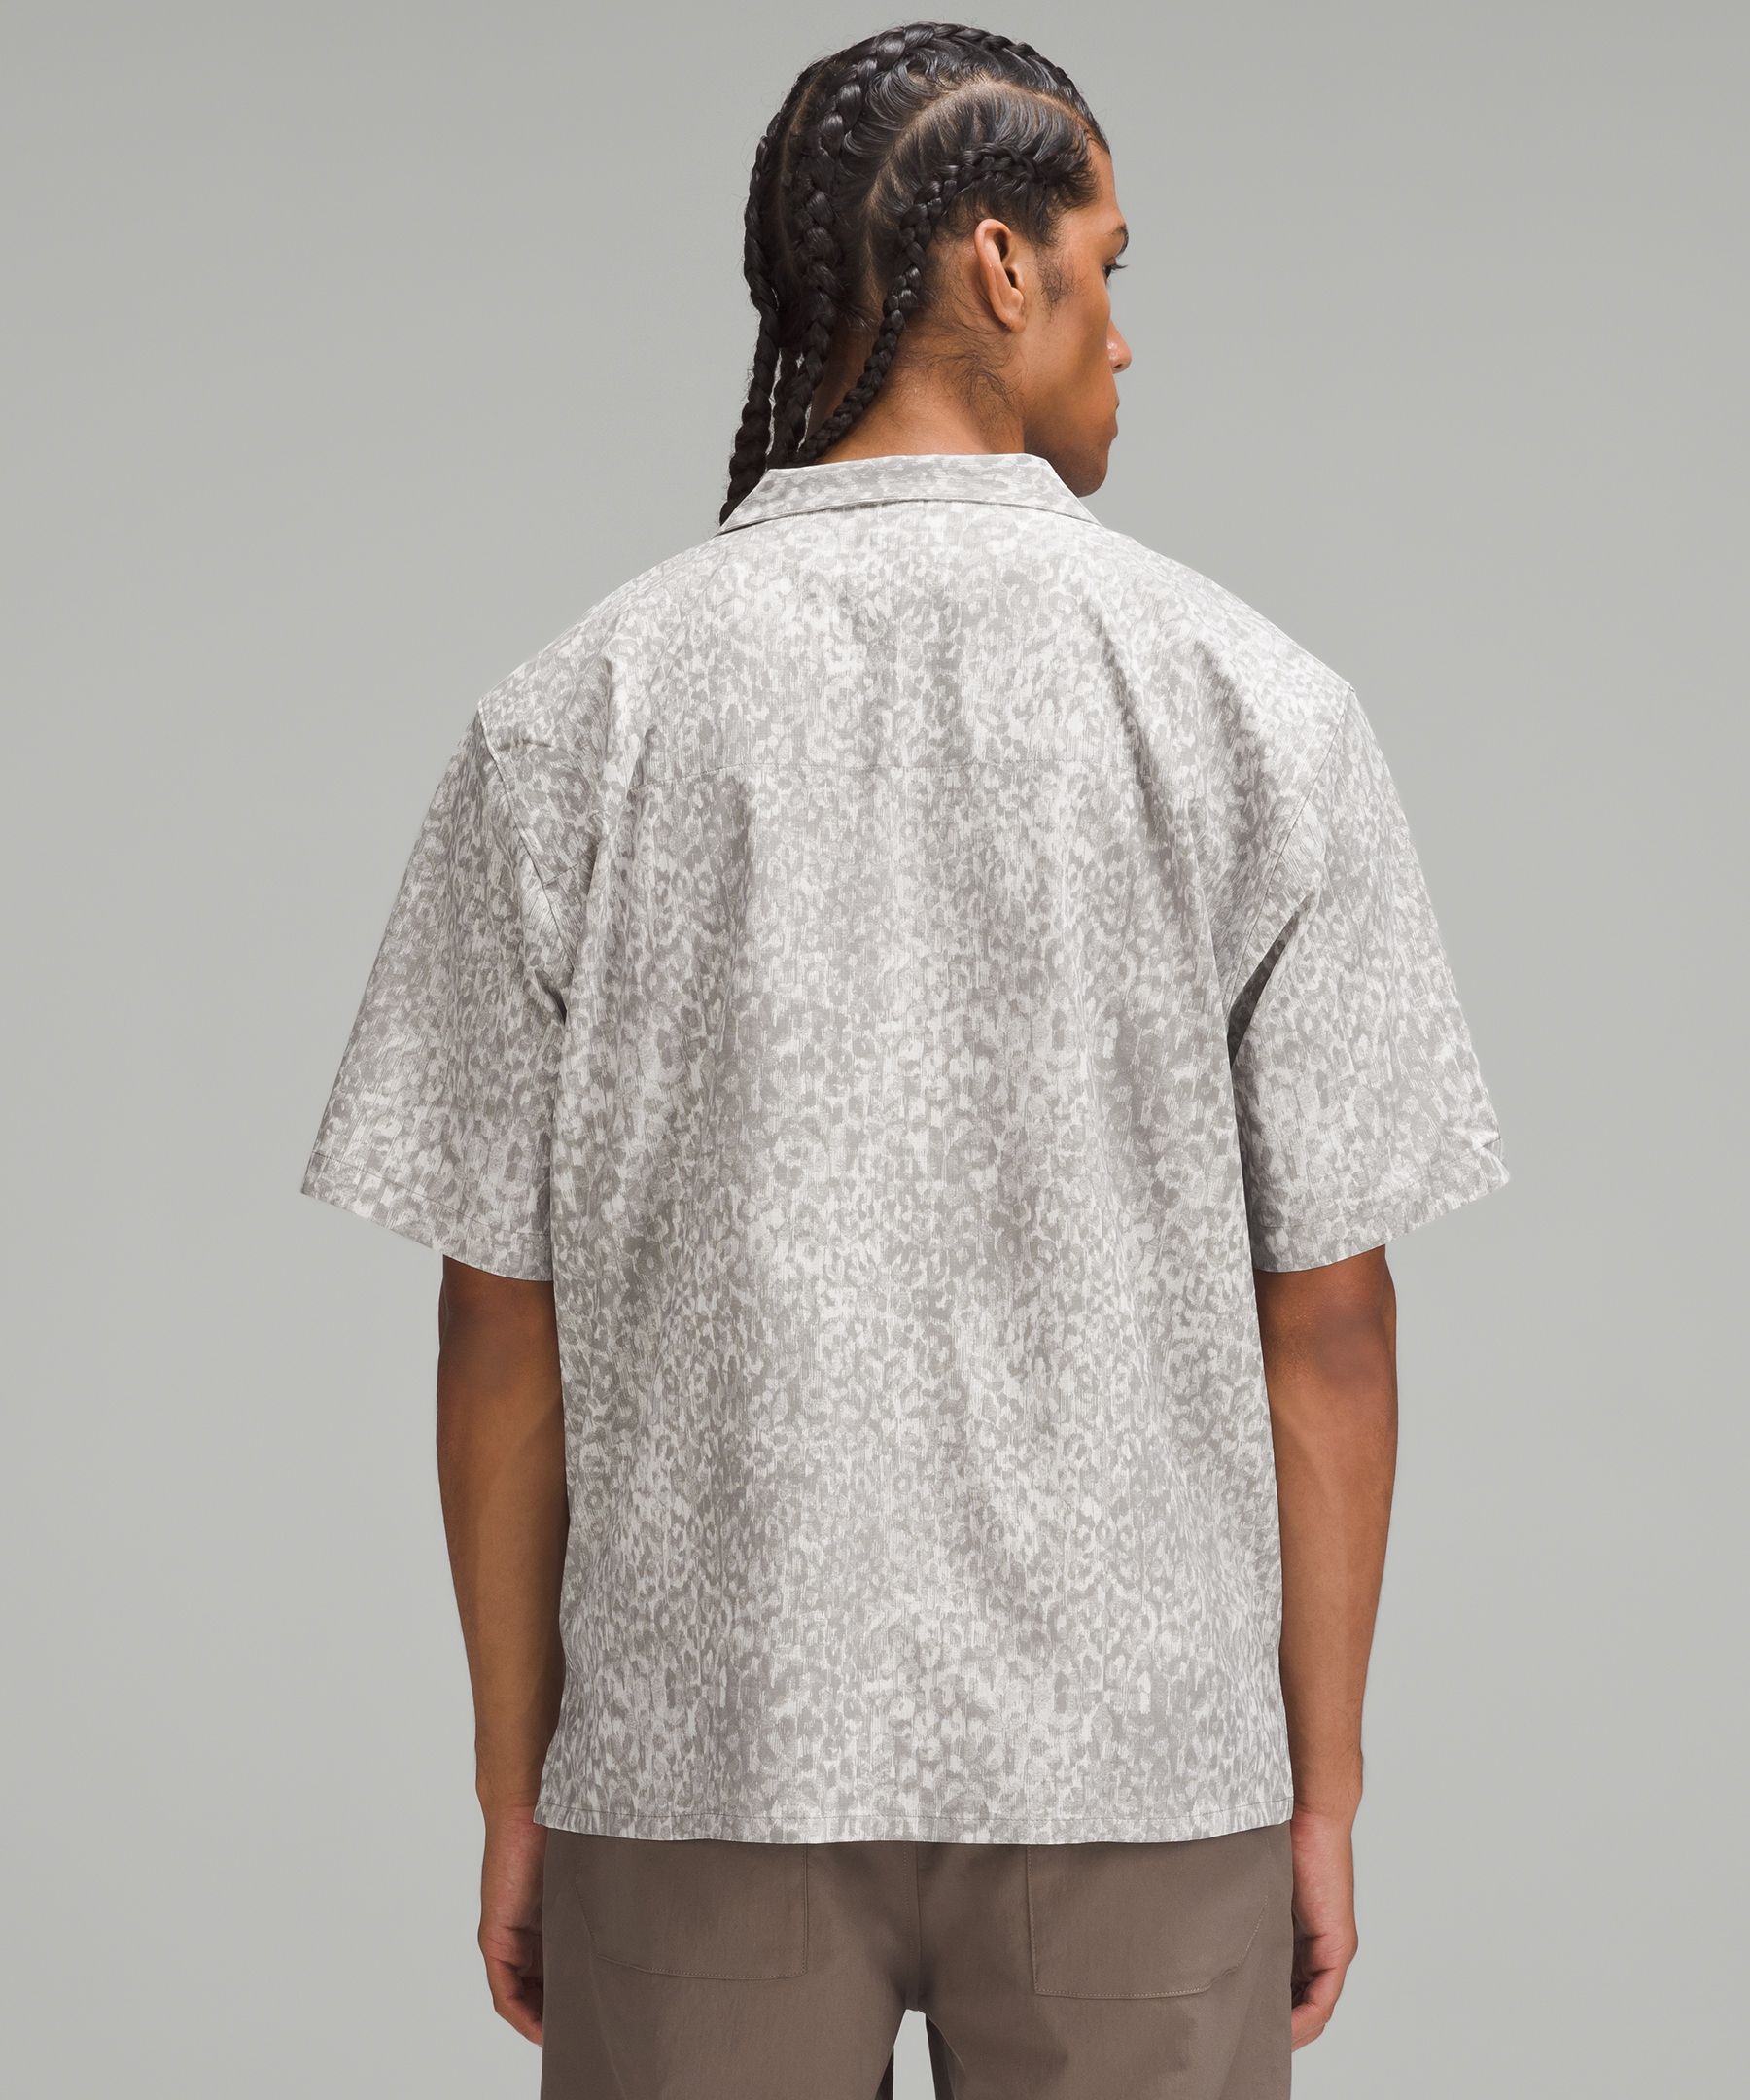 Lululemon Airing Easy Short-Sleeve Shirt - White - Size Large Wovenair Fabric